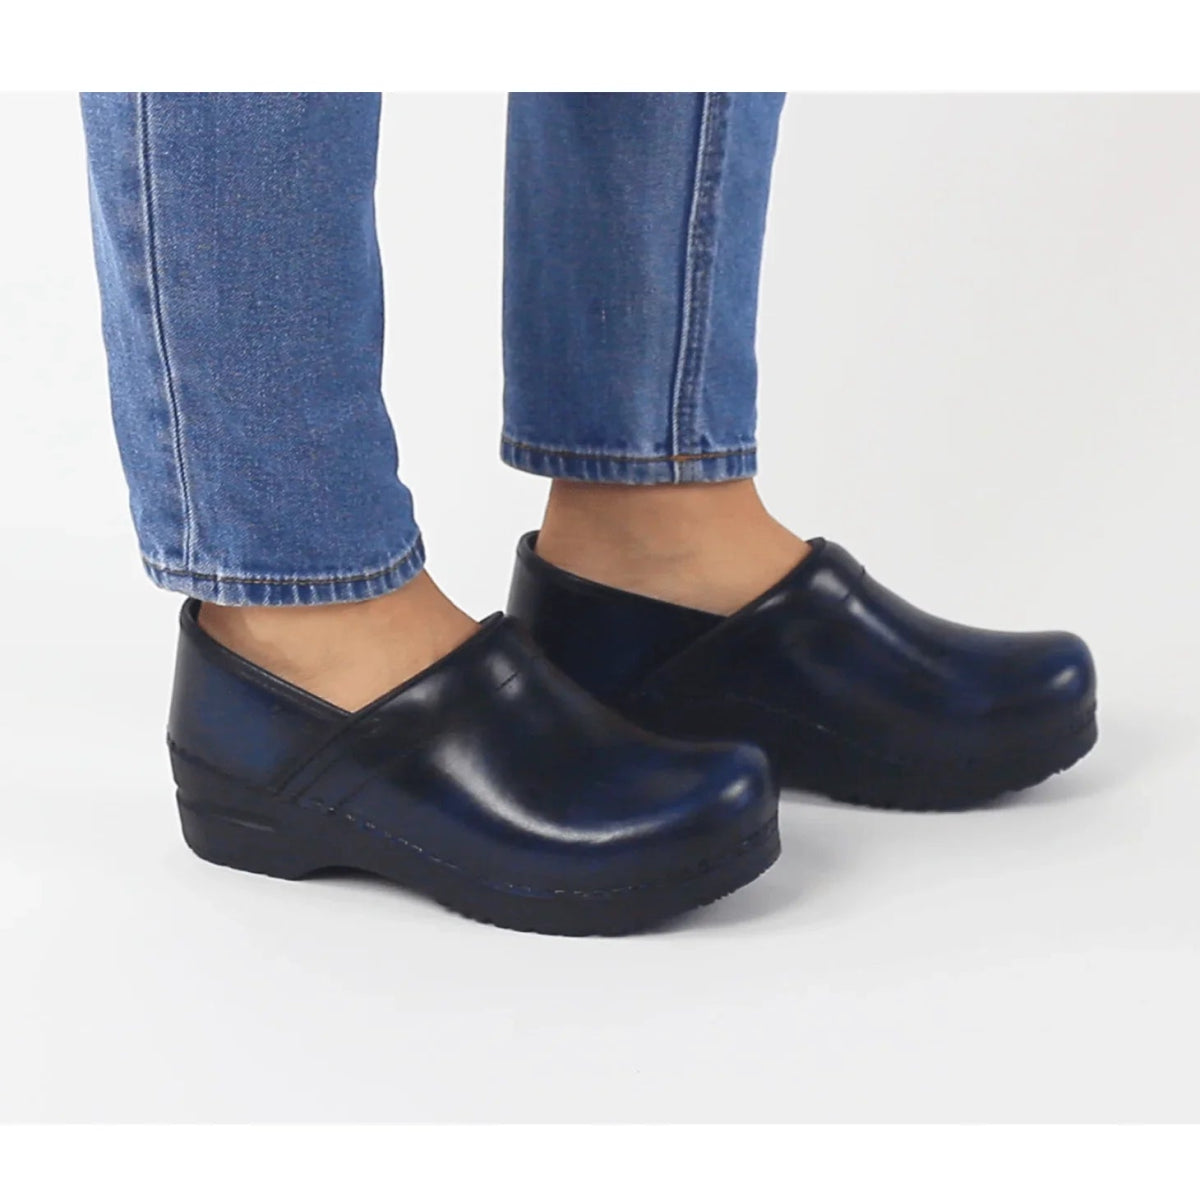 SANITA PROFESSIONAL CABRIO WOMEN CLOG IN BLUE - TLW Shoes